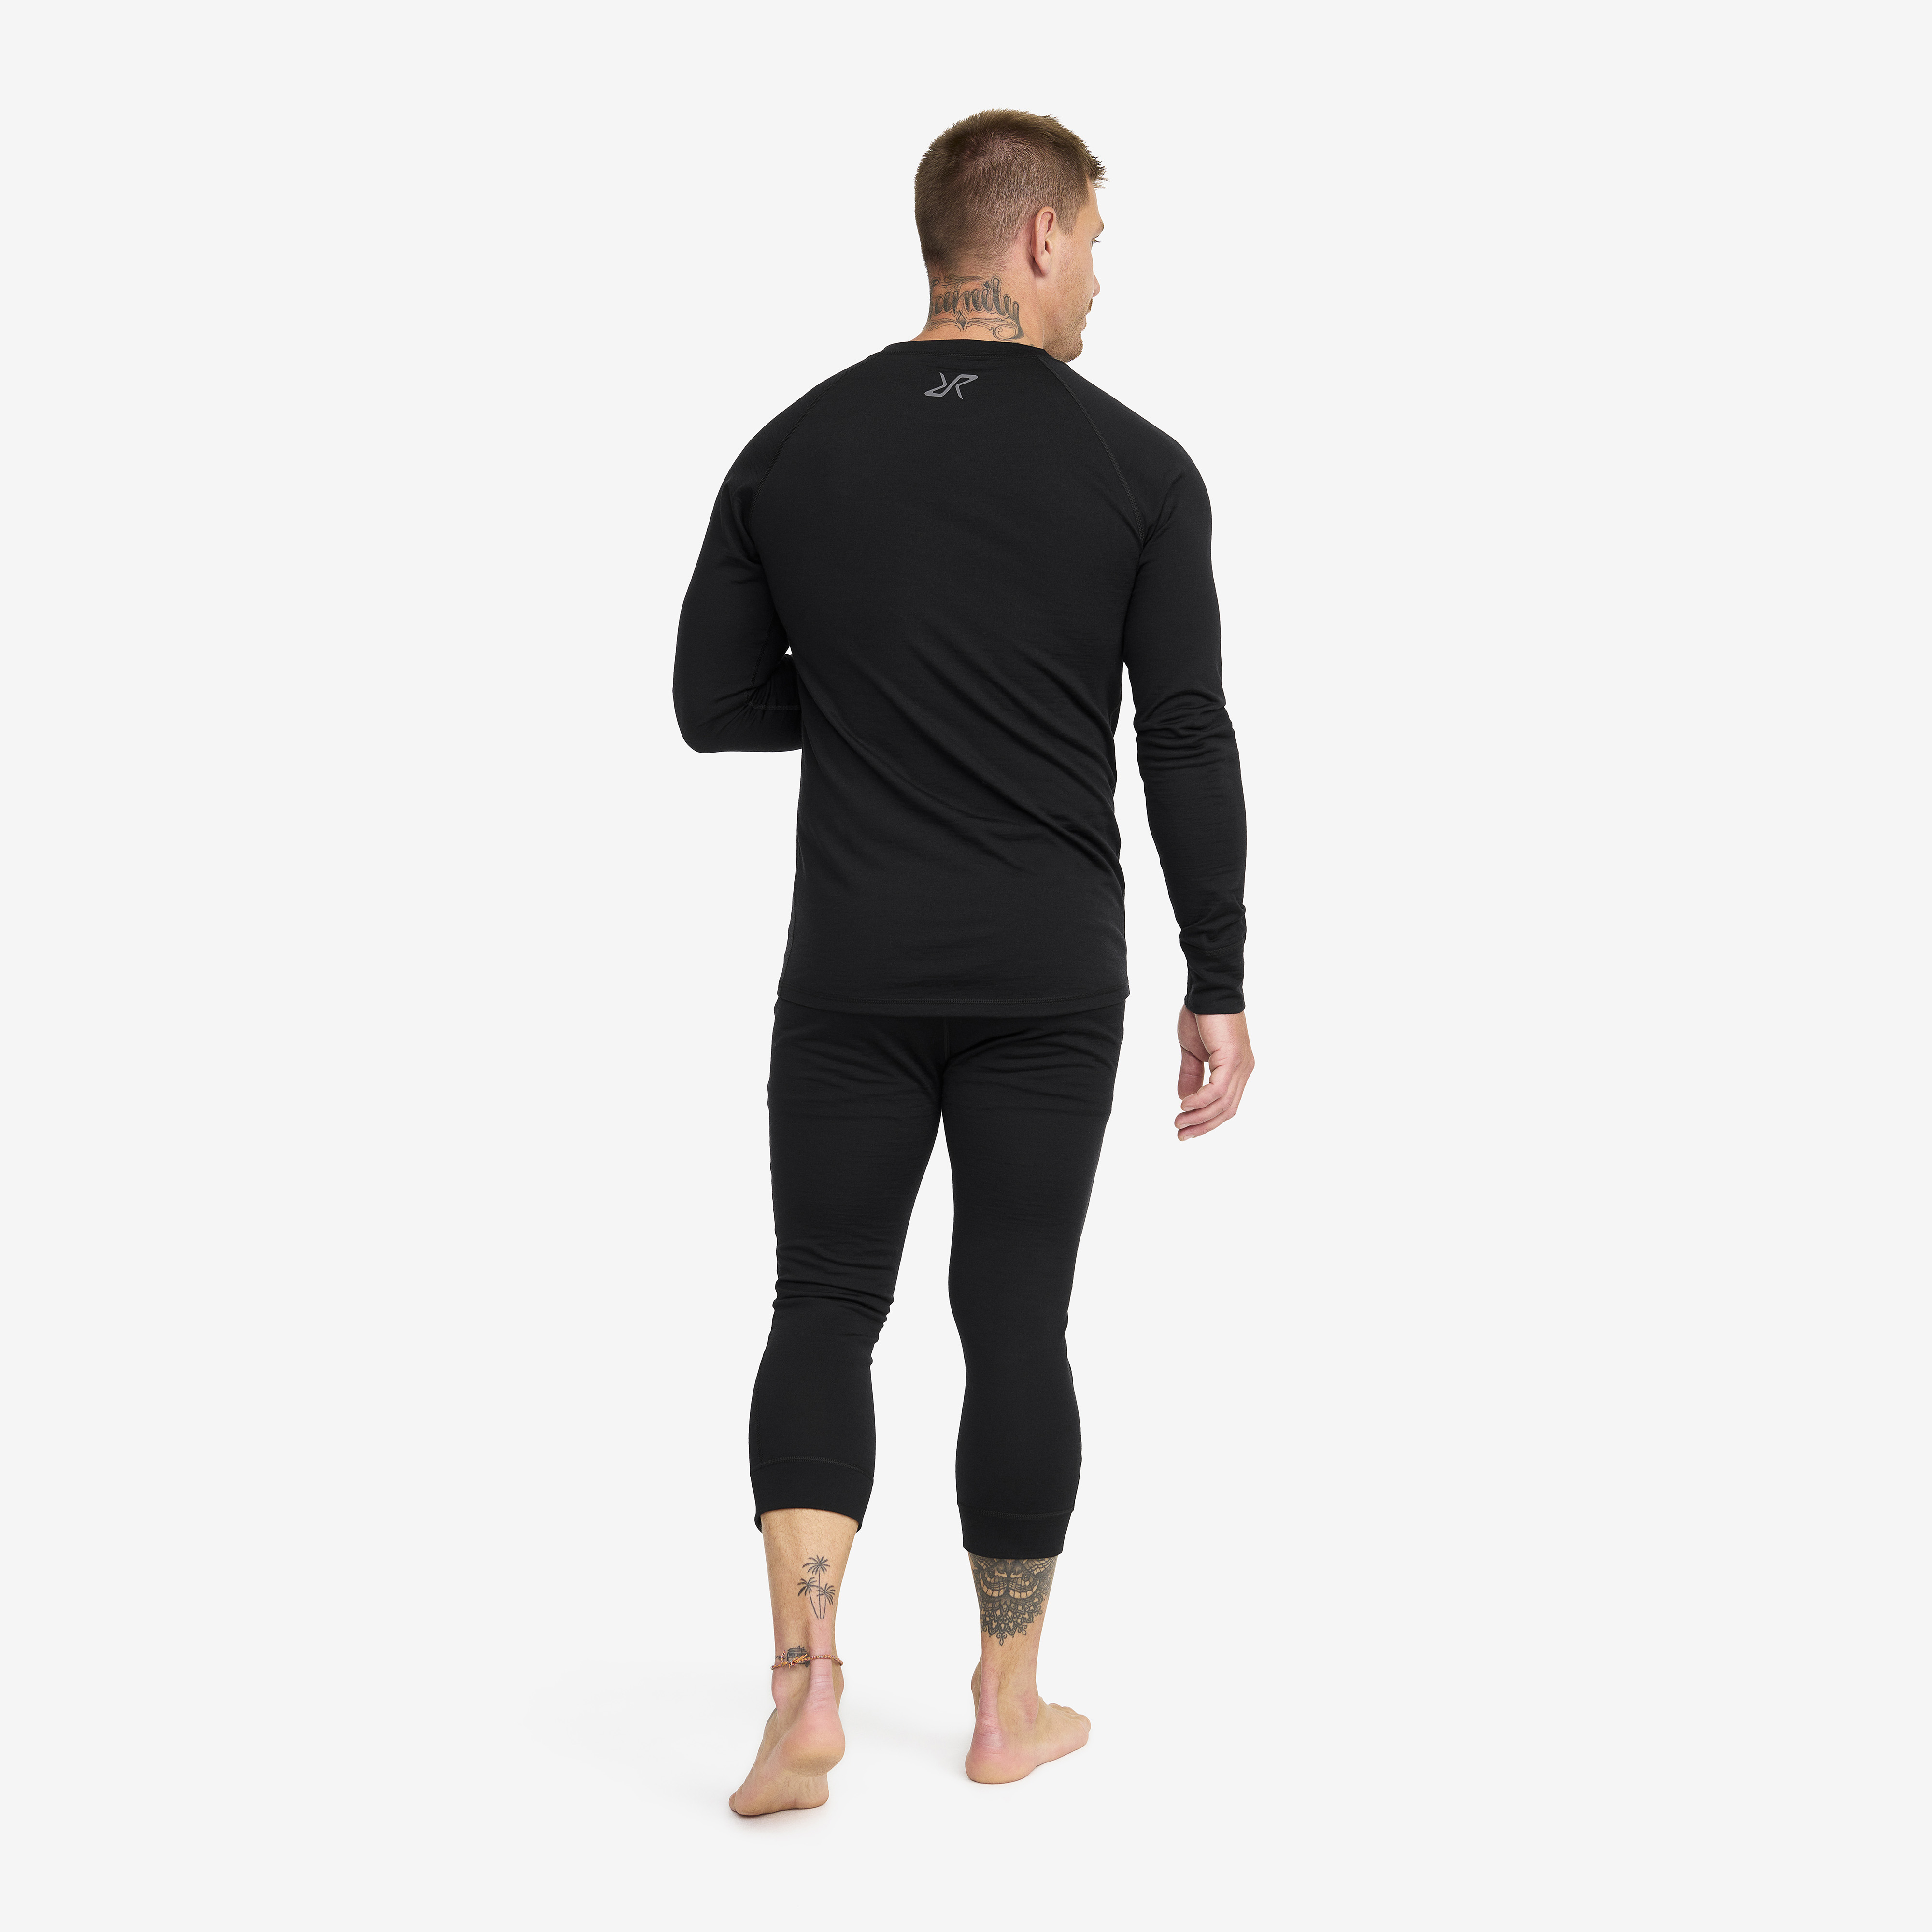 Merino thermal underwear - Men's 3/4 pants – black